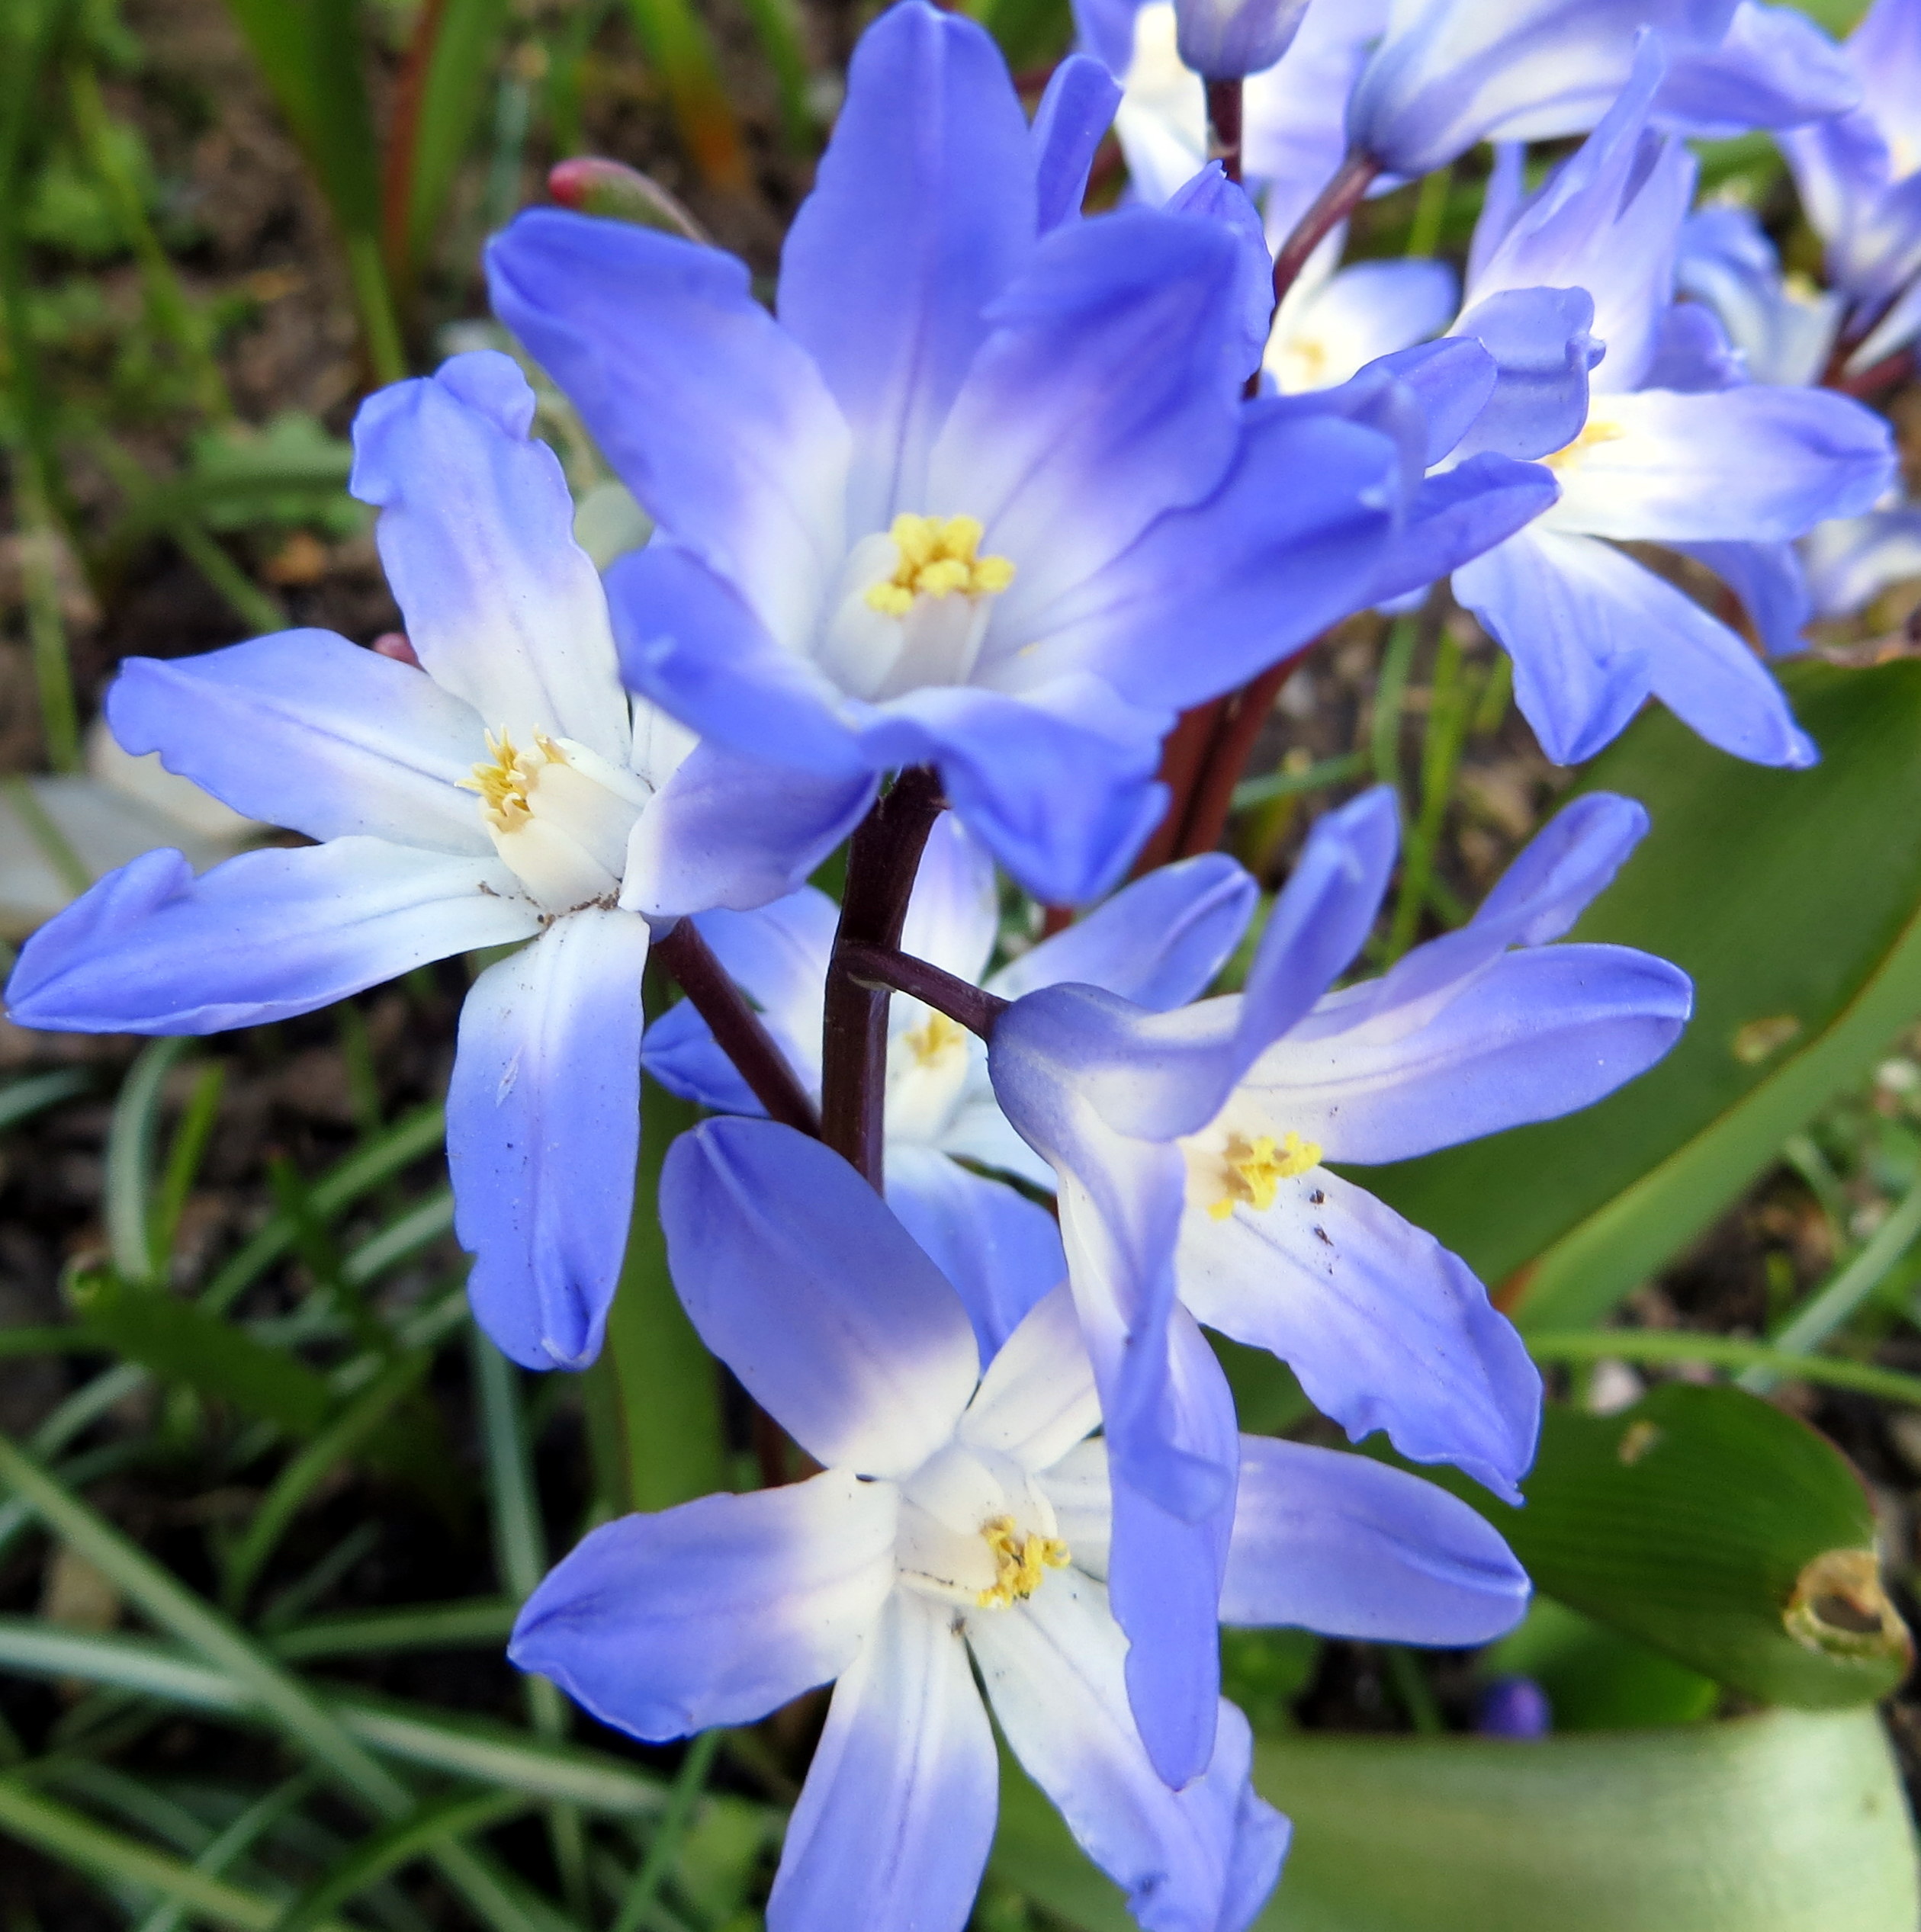 File:Blue flower macro (8603068762).jpg - Wikimedia Commons